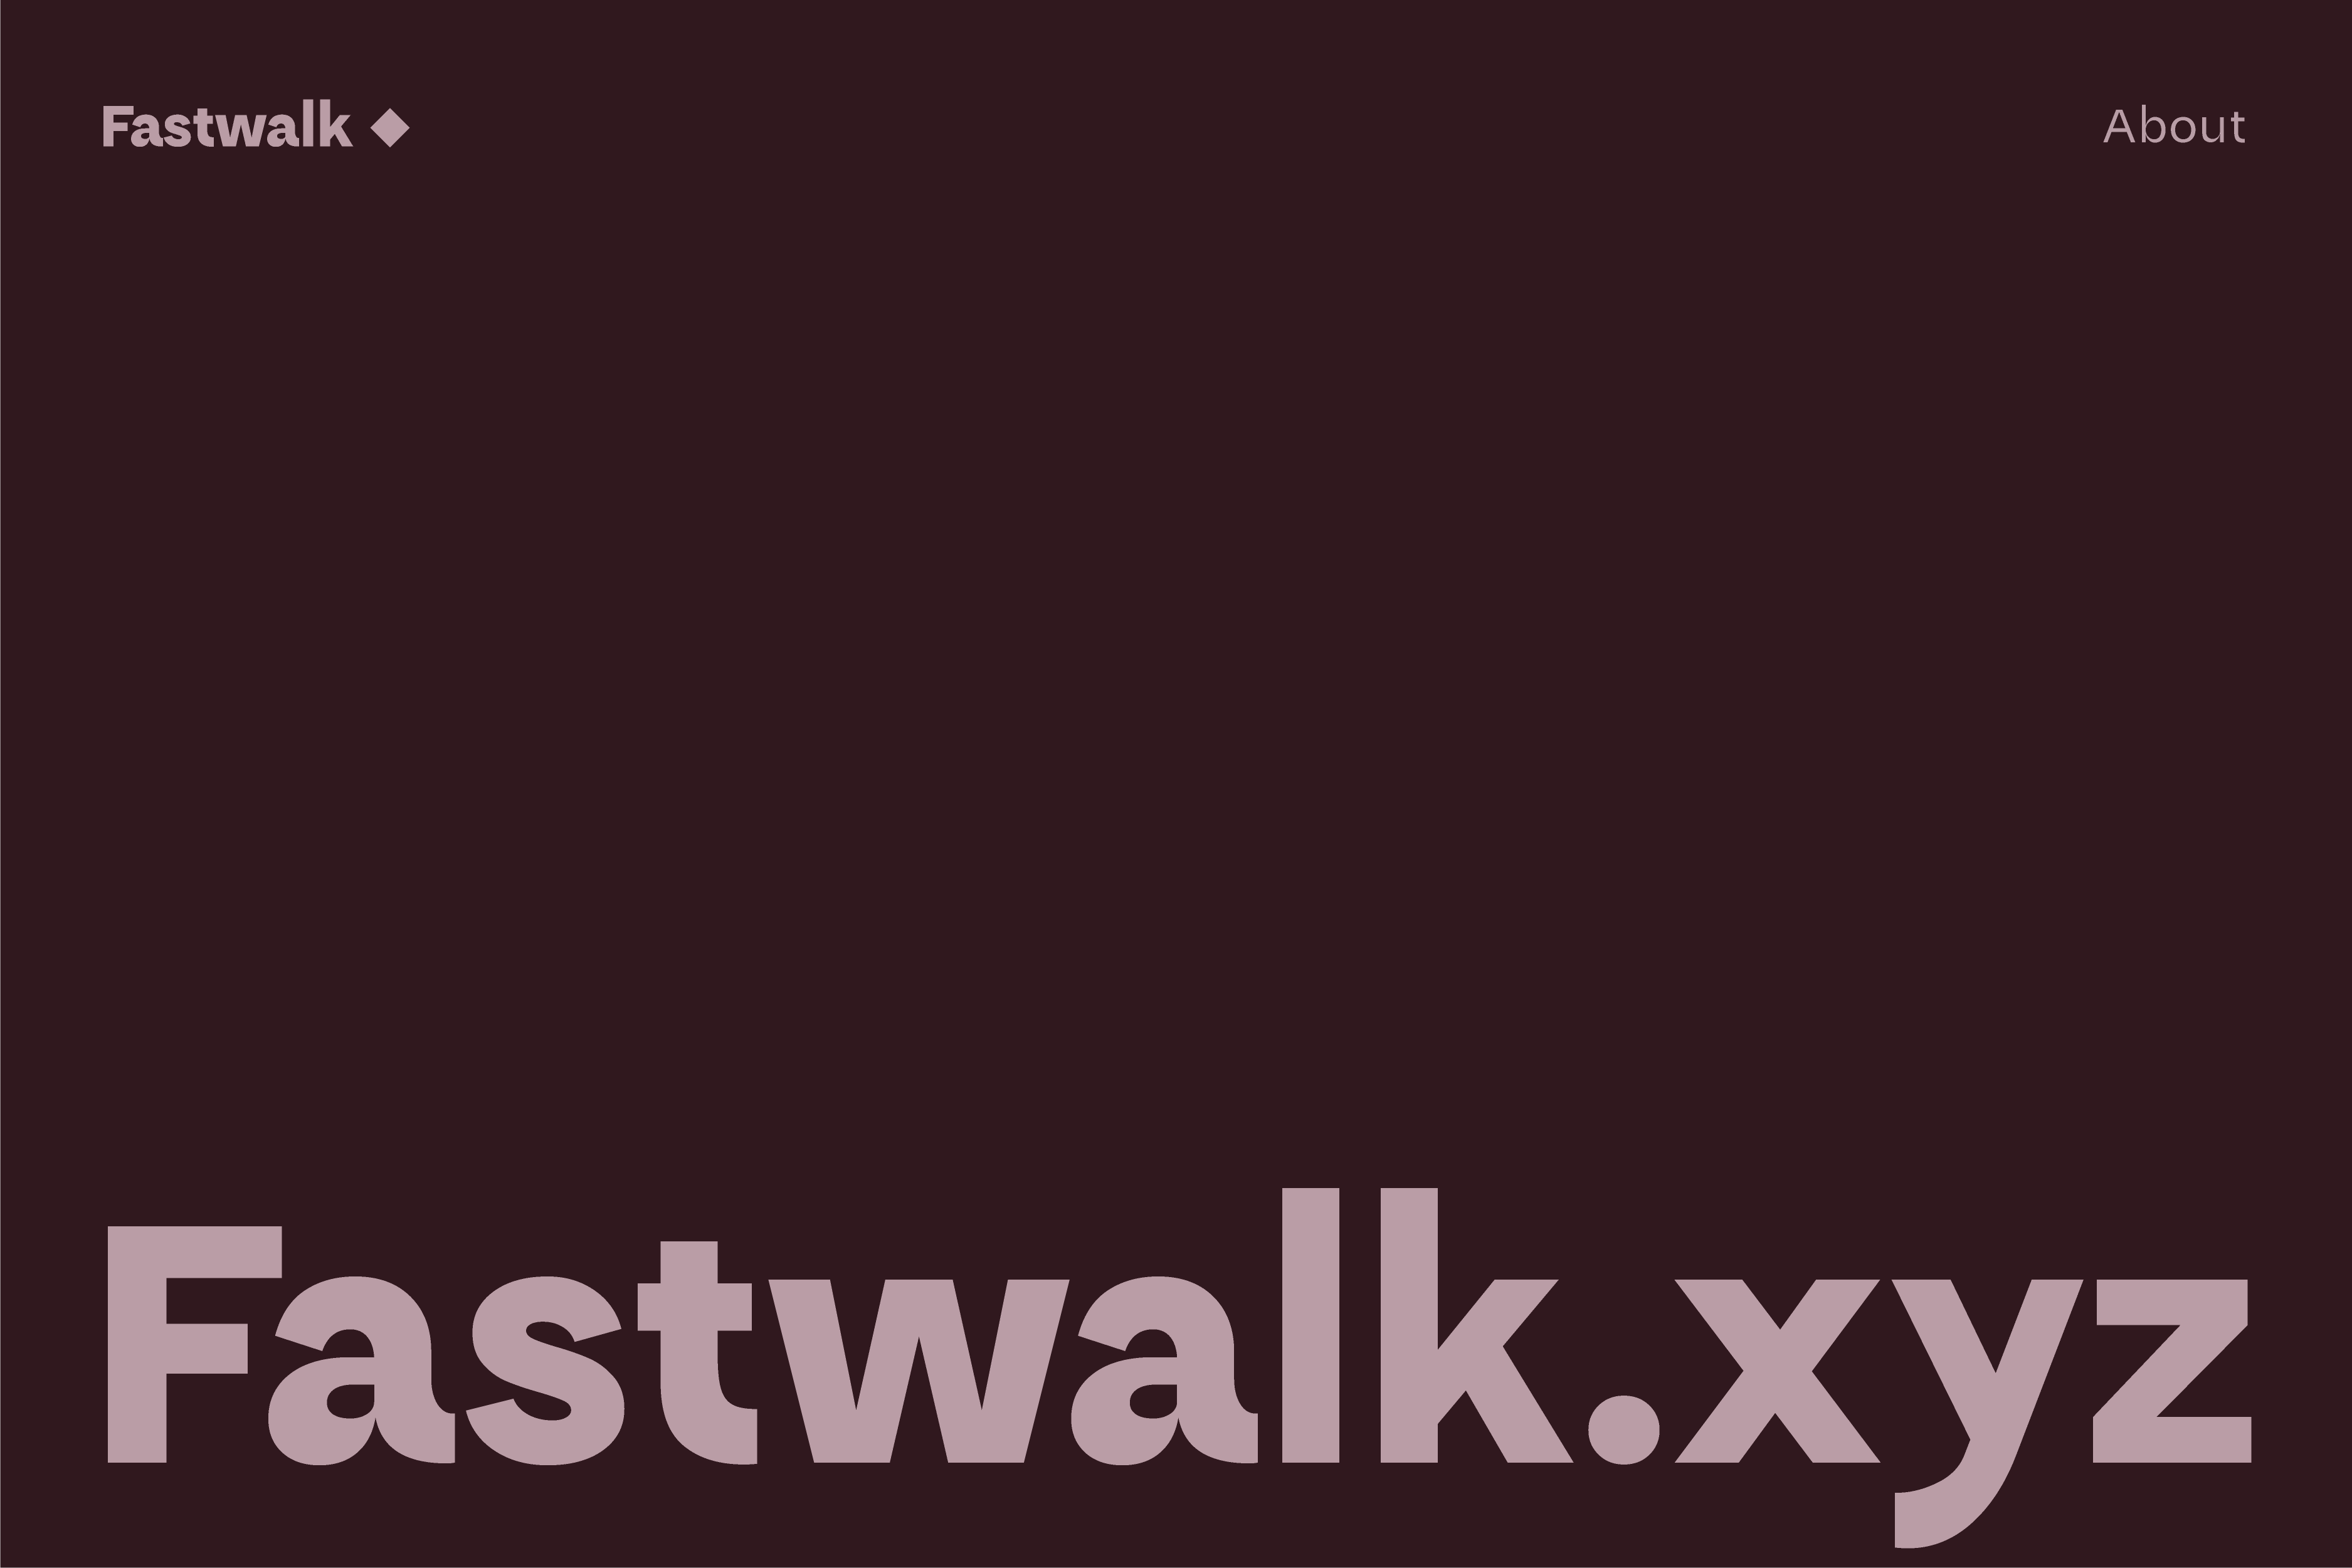 Fastwalk